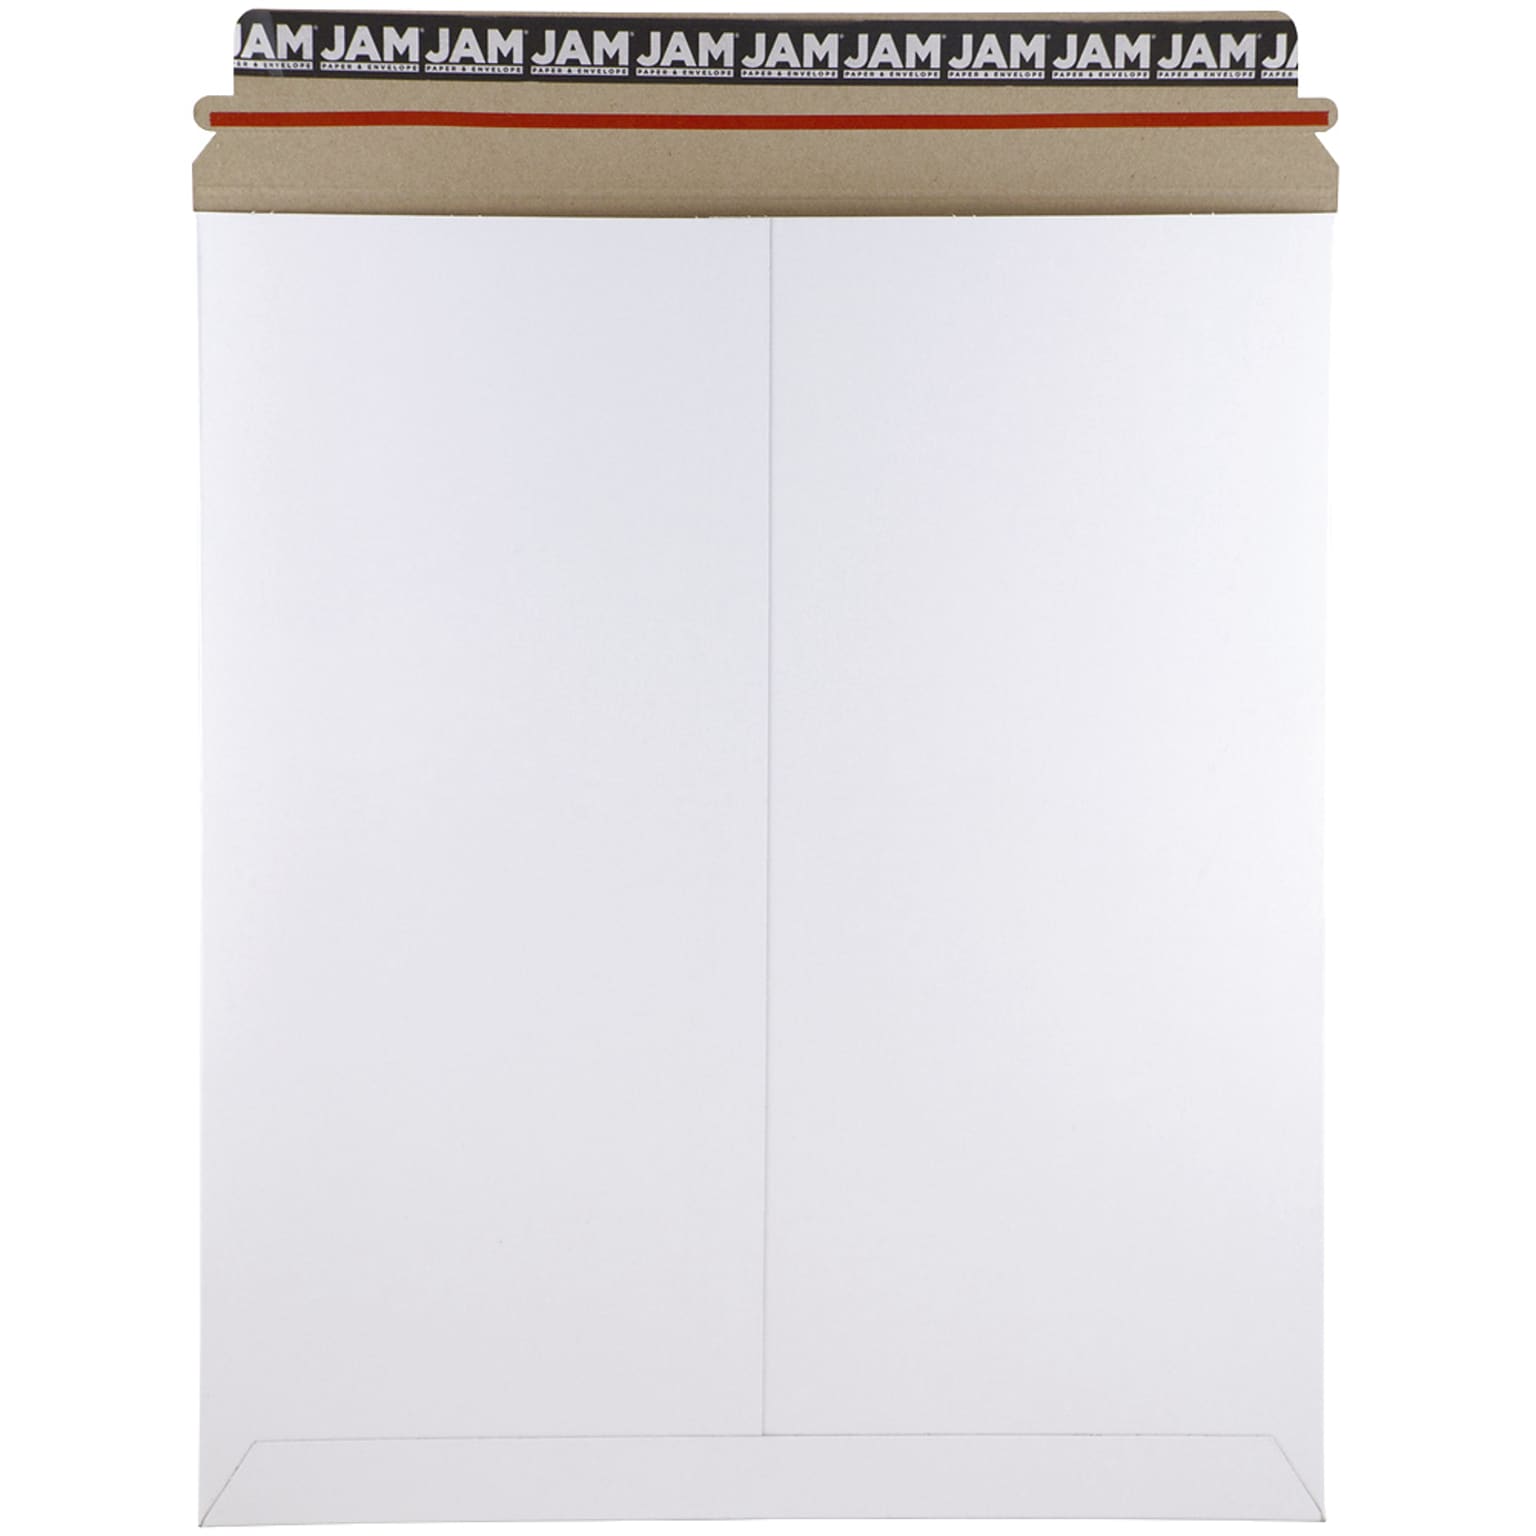 Jam Paper Stay-Flat Photo Mailer, 12.75 x 15, White, 6/Pack (4PSWB)